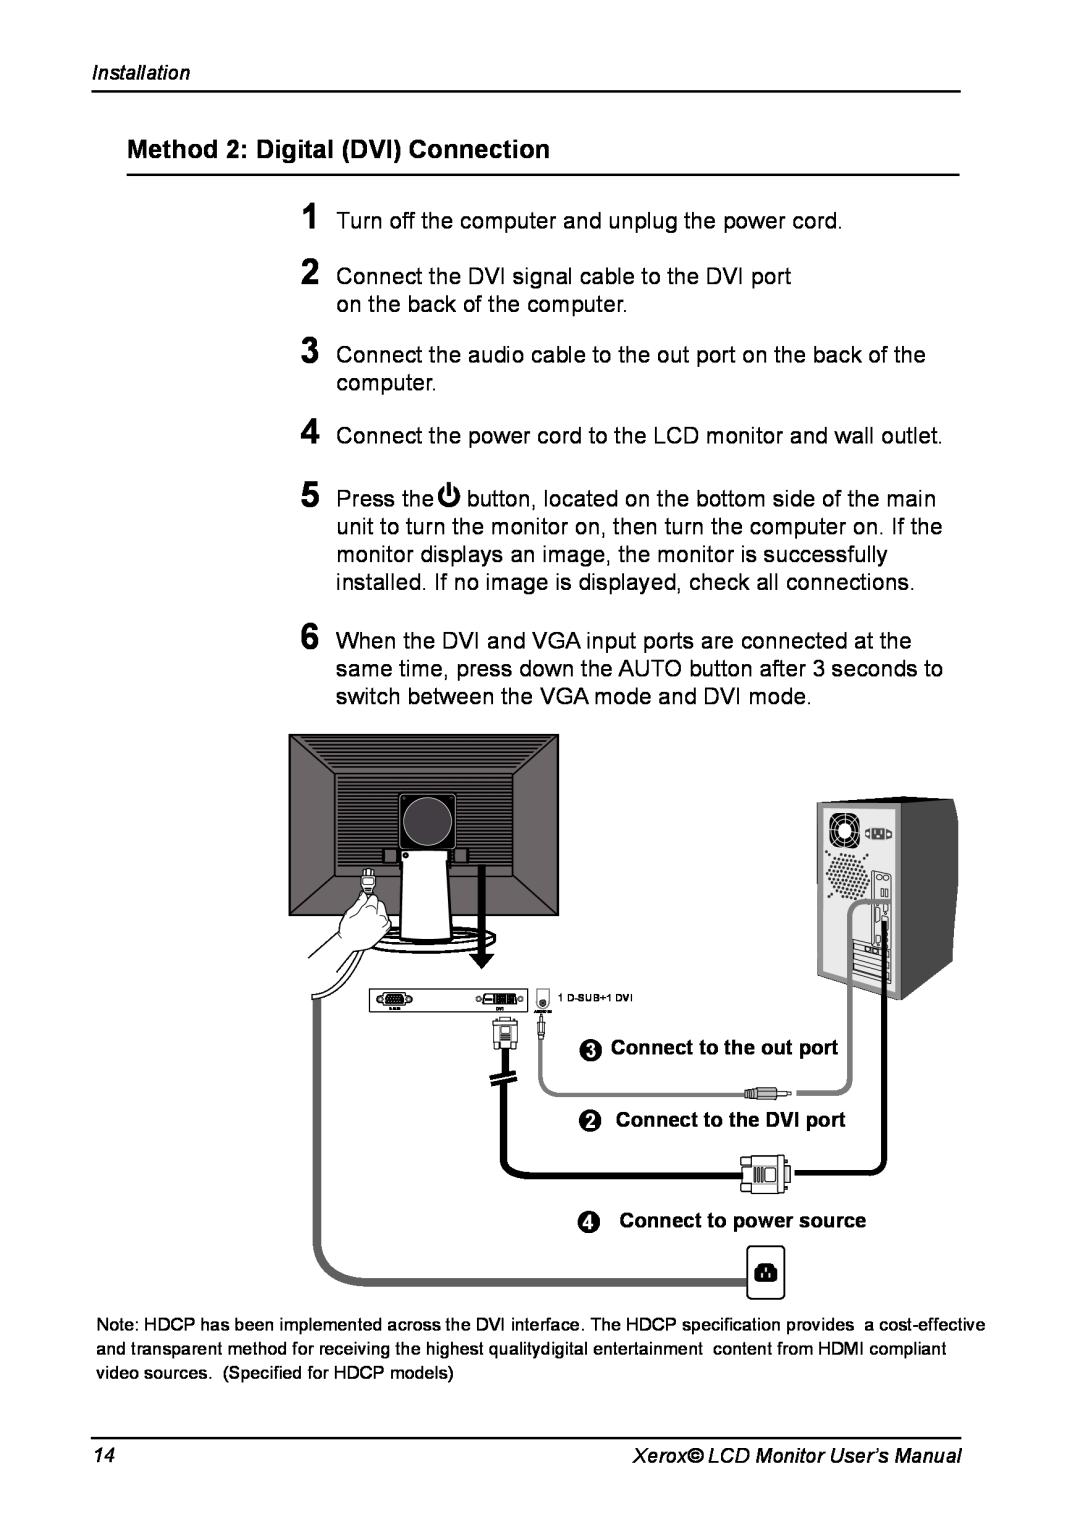 Xerox XM7-19w manual Method 2 Digital DVI Connection, D-SUB+1 DVI 